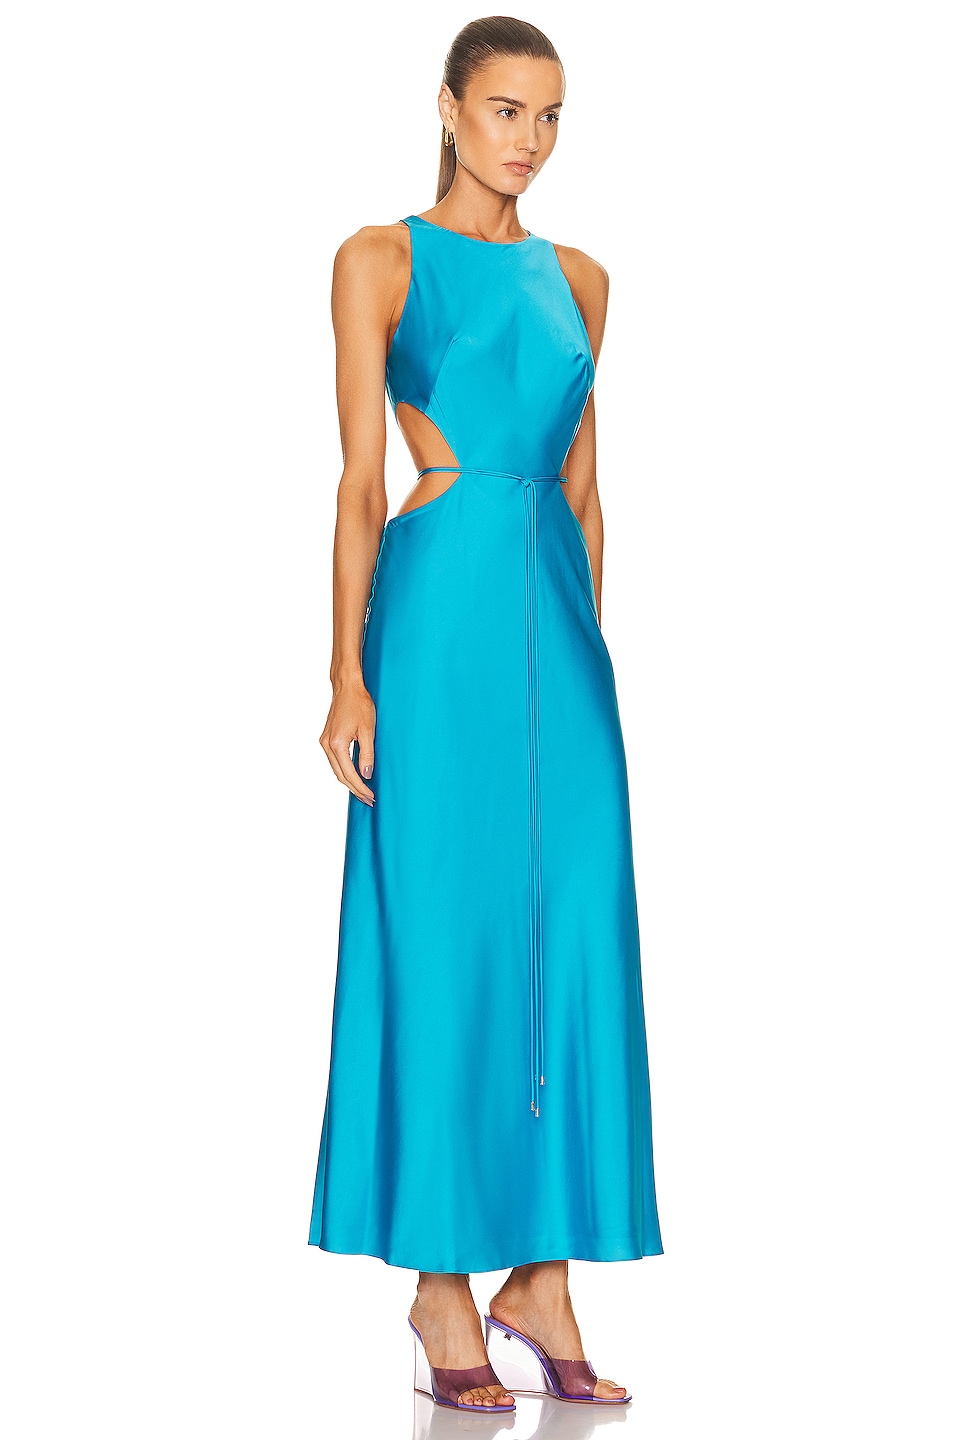 Alexis Lune Dress in Sapphire | FWRD